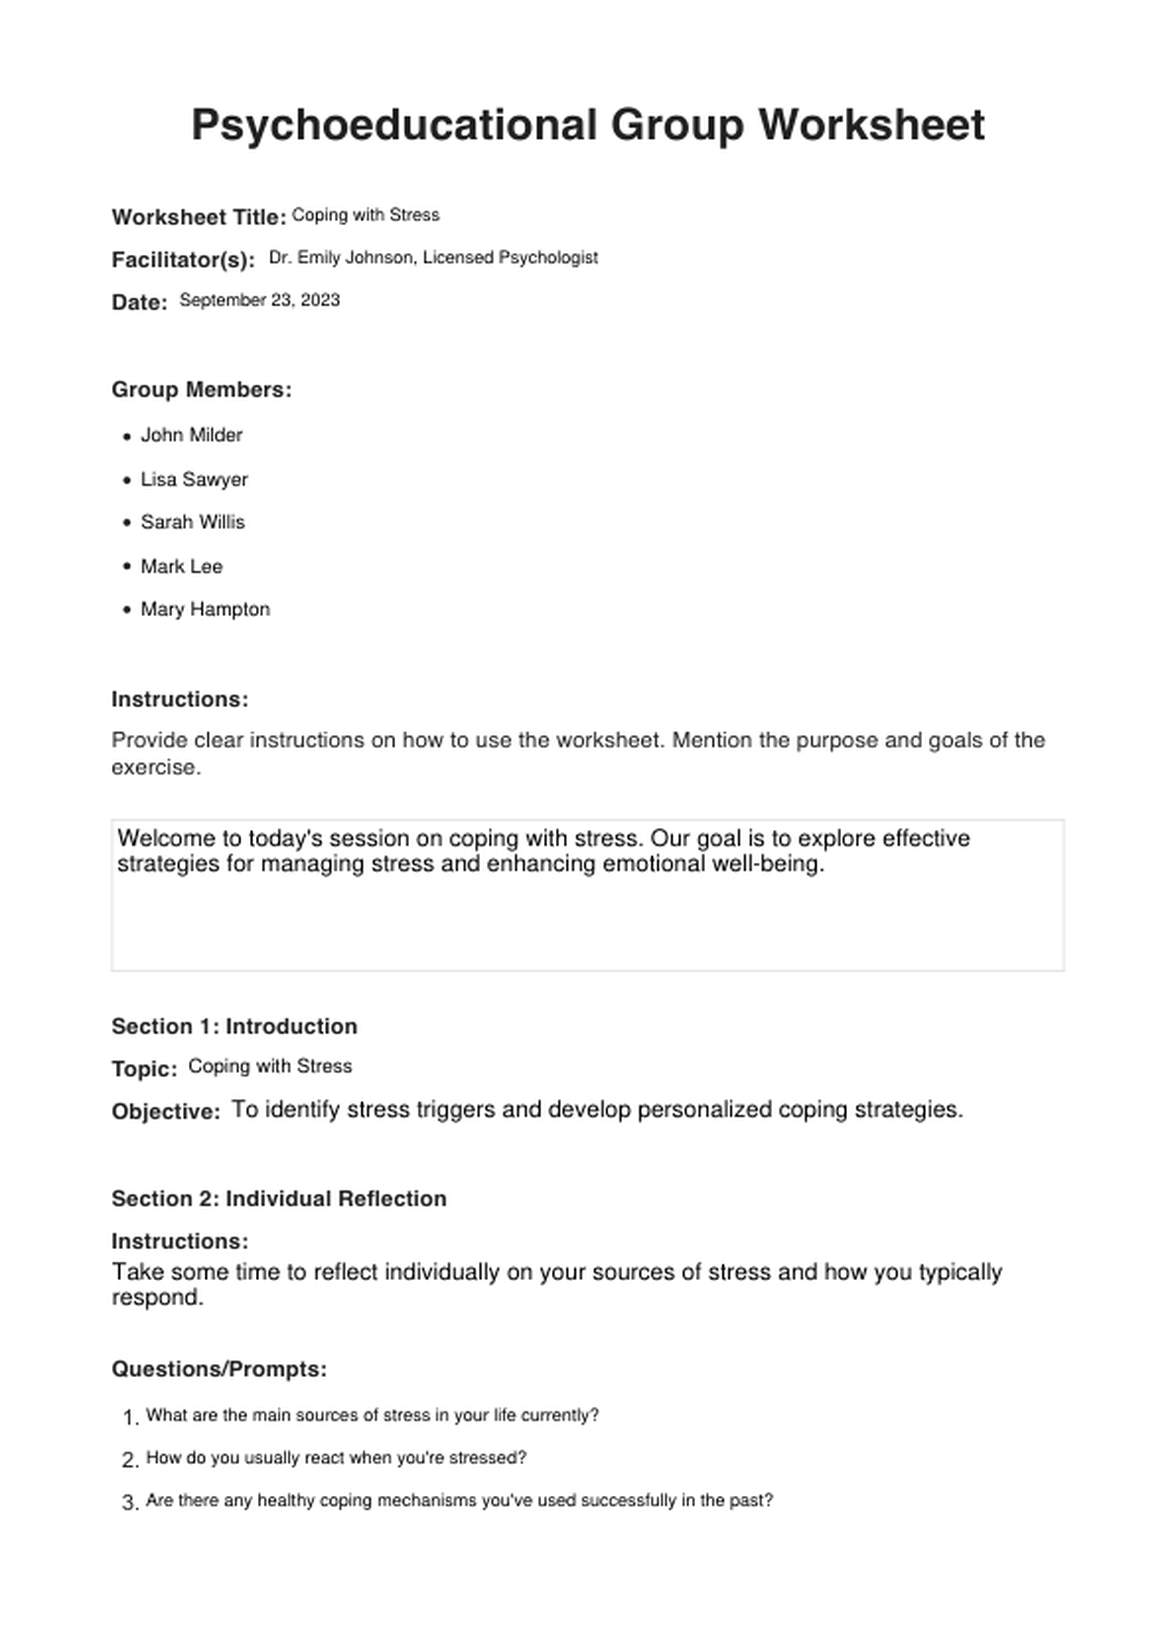 Psychoeducational Group Worksheets PDF Example